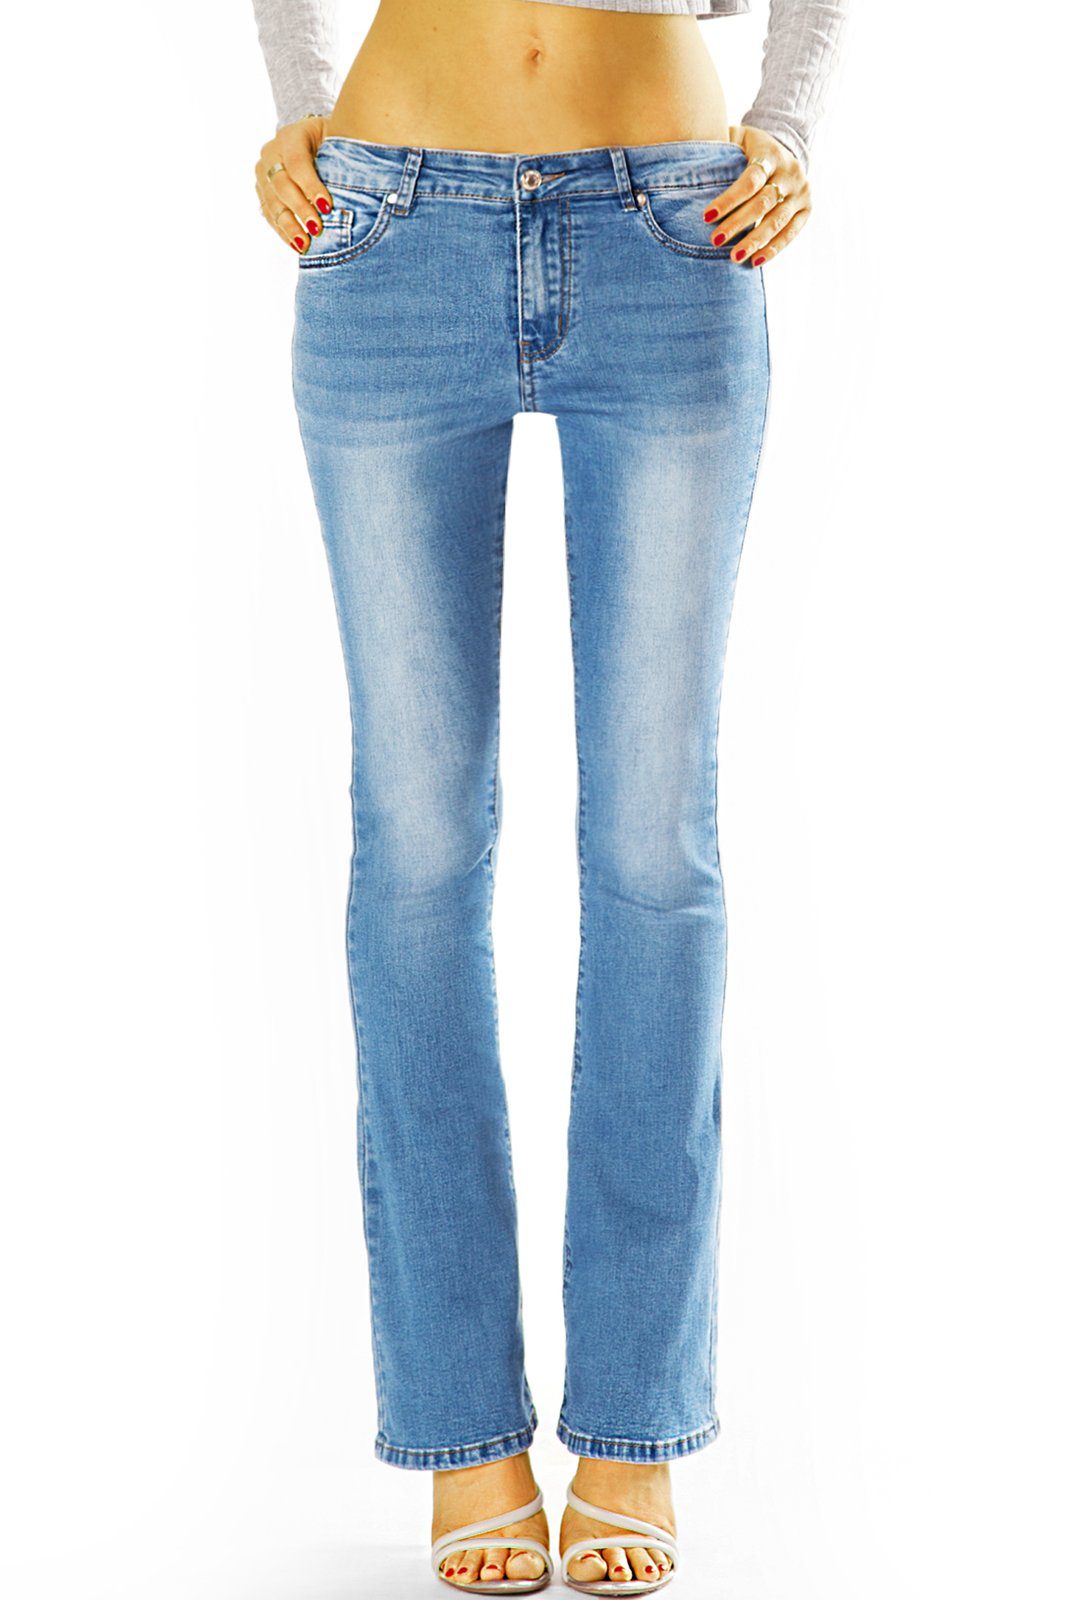 Stretch-Anteil, mit Bootcut-Jeans be - Hose Medium Waist Bootcut 5-Pocket-Style styled Damen Jeans - j13L Schlagjeans